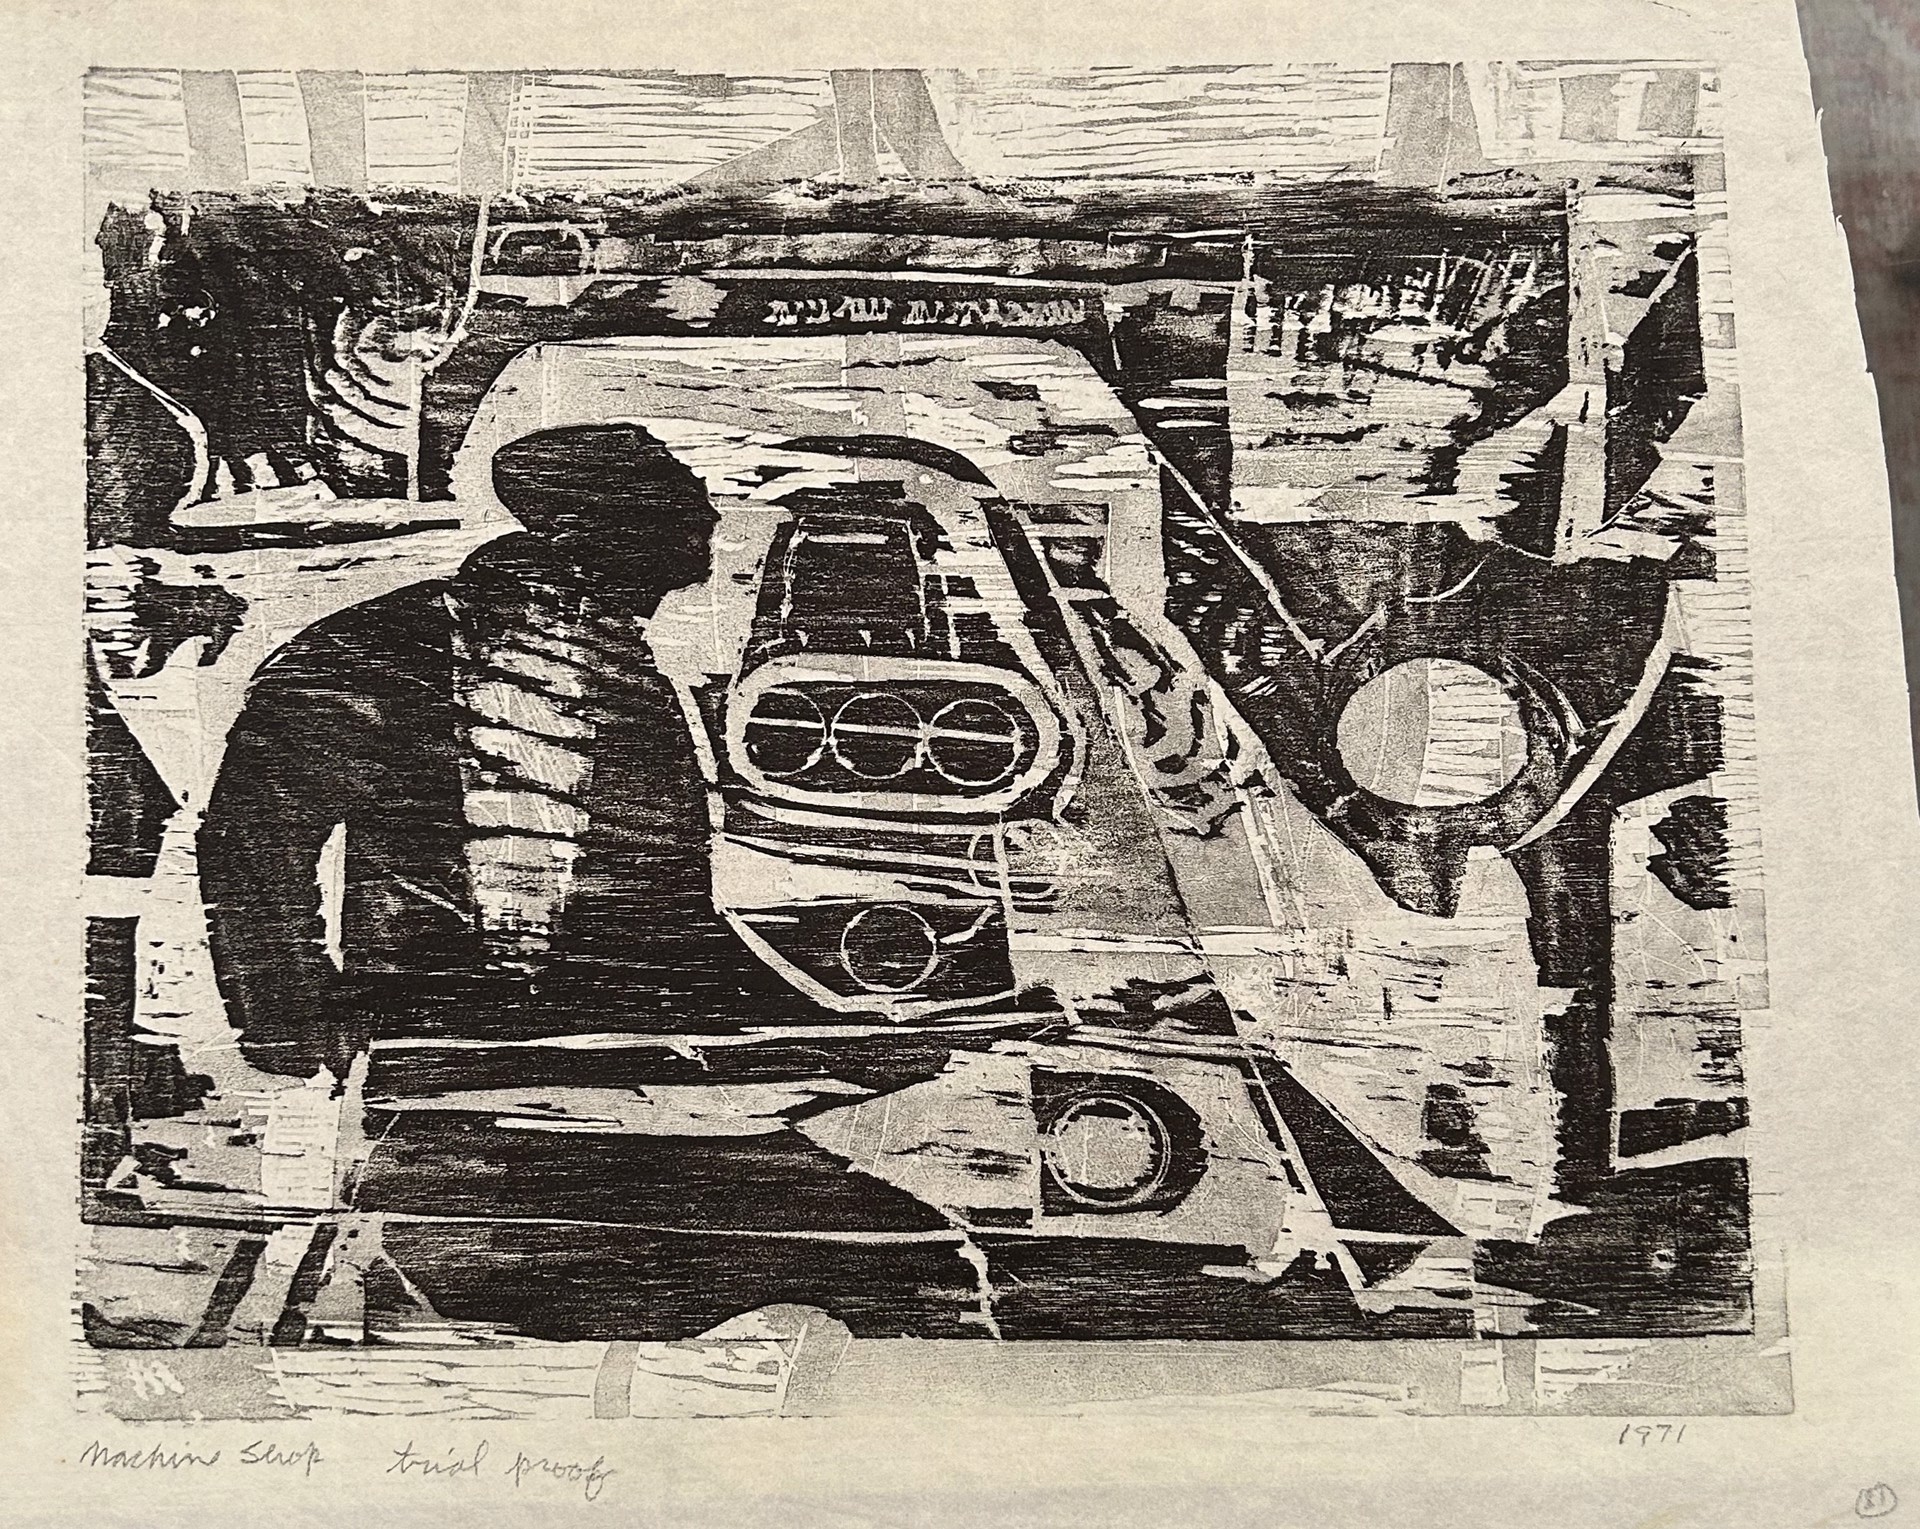 81a. Machine Shop by Bill Reily - Prints